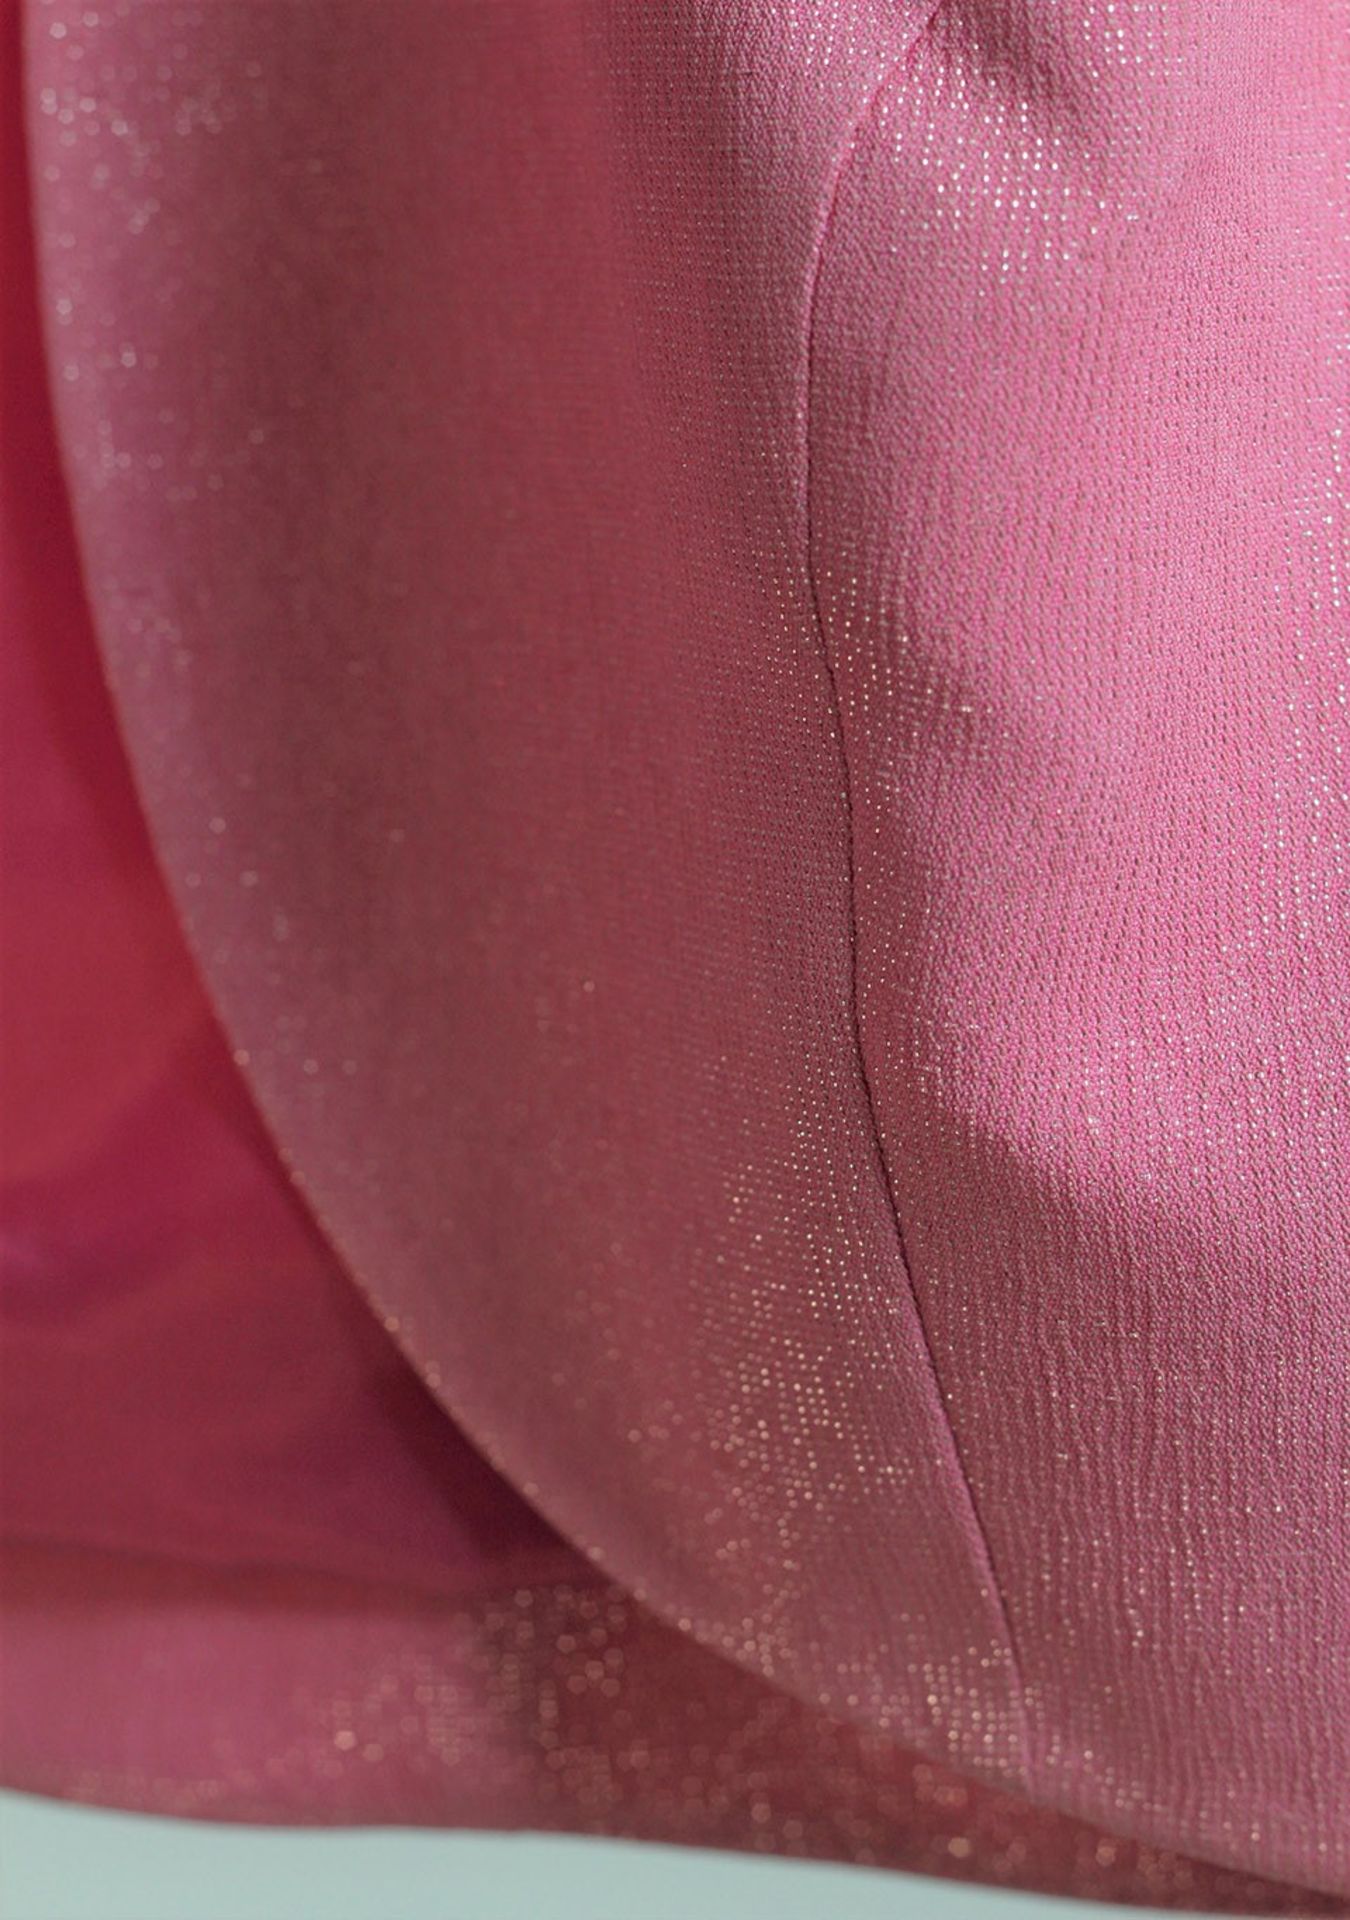 1 x Boutique Le Duc Pink Waistcoat - Size: L - Material: 49% Cotton, 40% Acetate, 11% Poly metal - Image 4 of 7